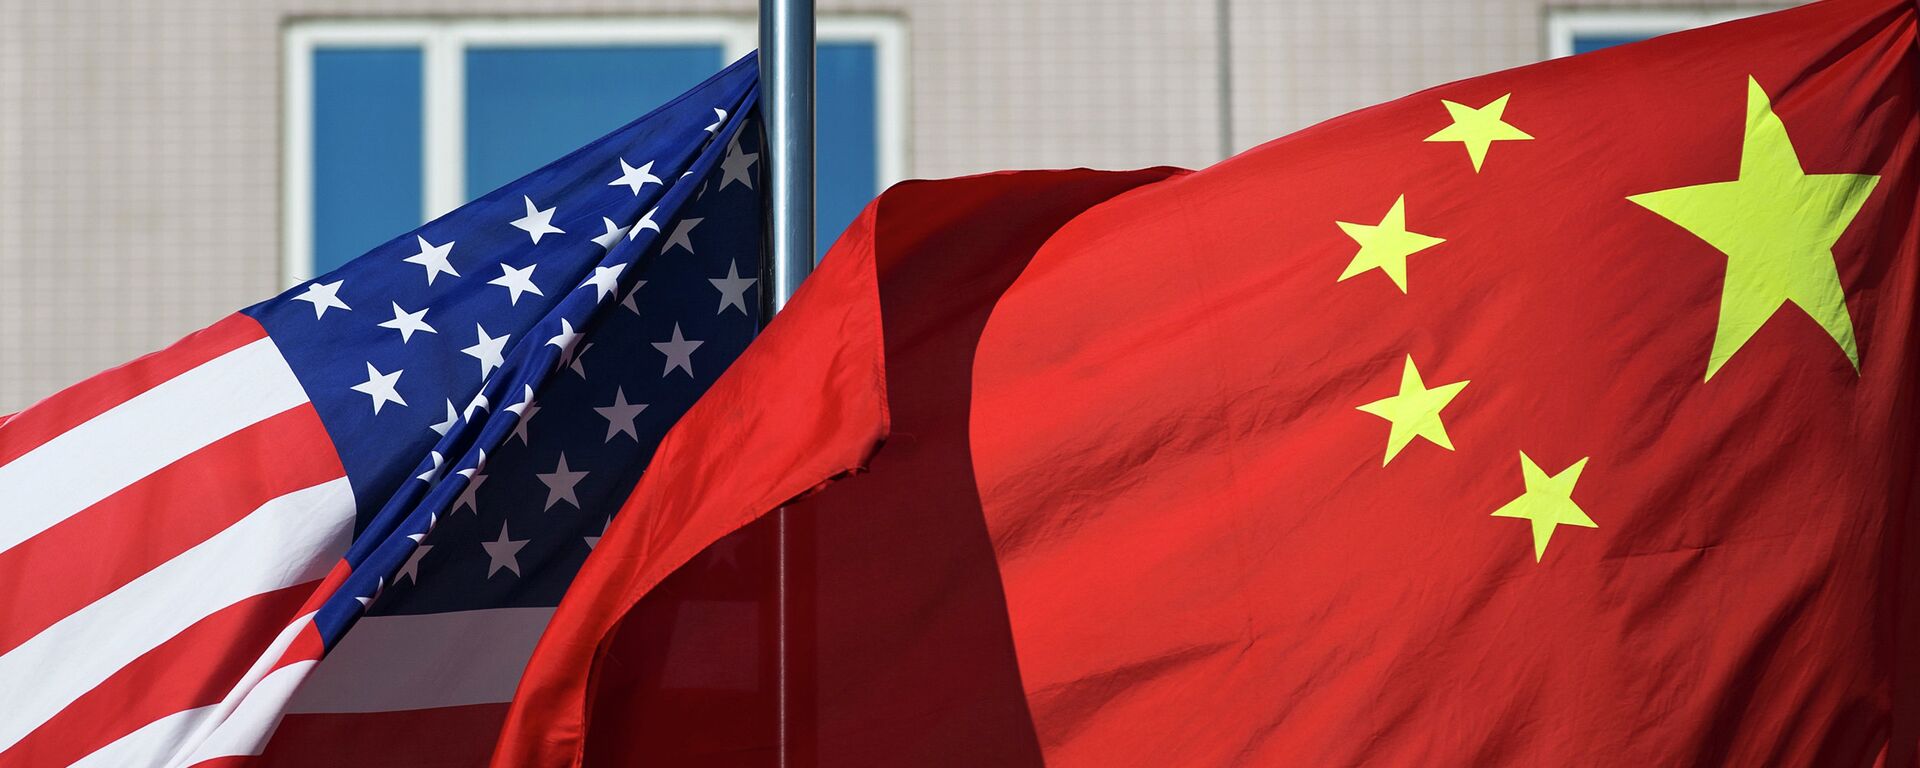 U.S. flag and China's flag flutter in winds at a hotel in Beijing Wednesday, Sept. 5, 2012 - Sputnik Mundo, 1920, 10.11.2021